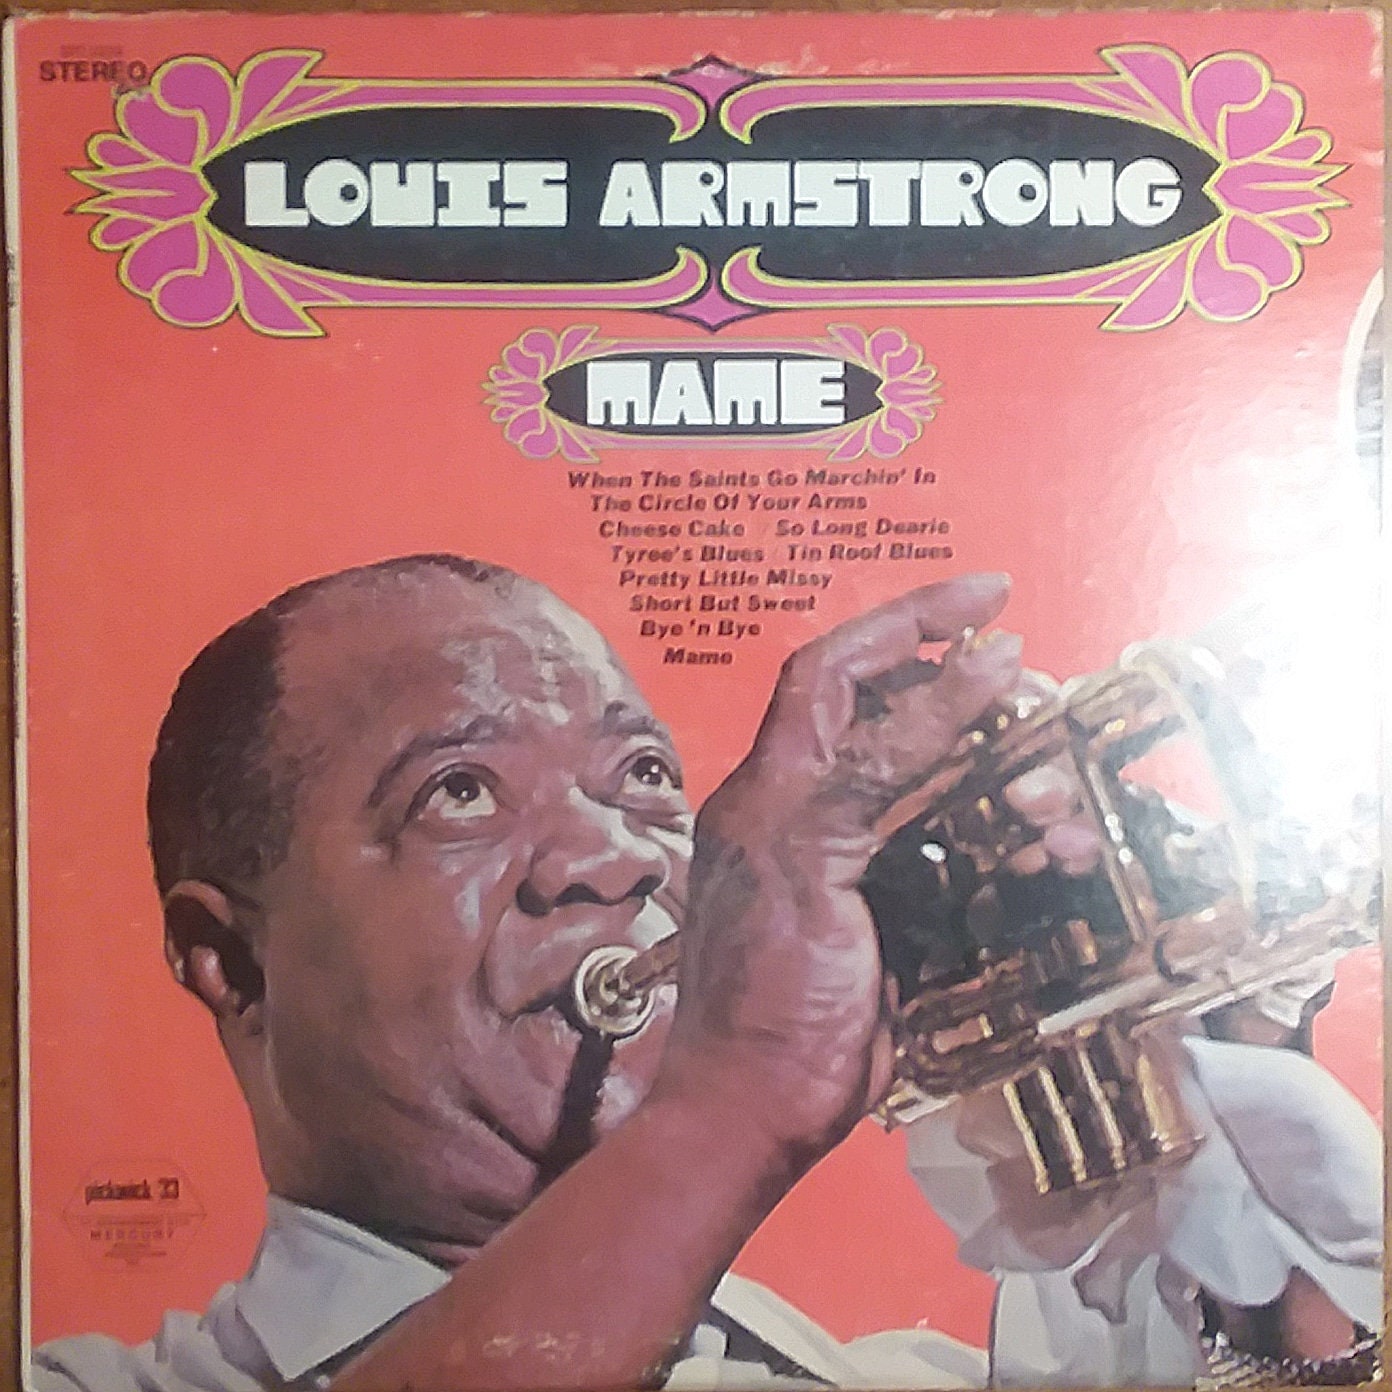 Louis Armstrong Ambassador Satch Record Album Vinyl LP